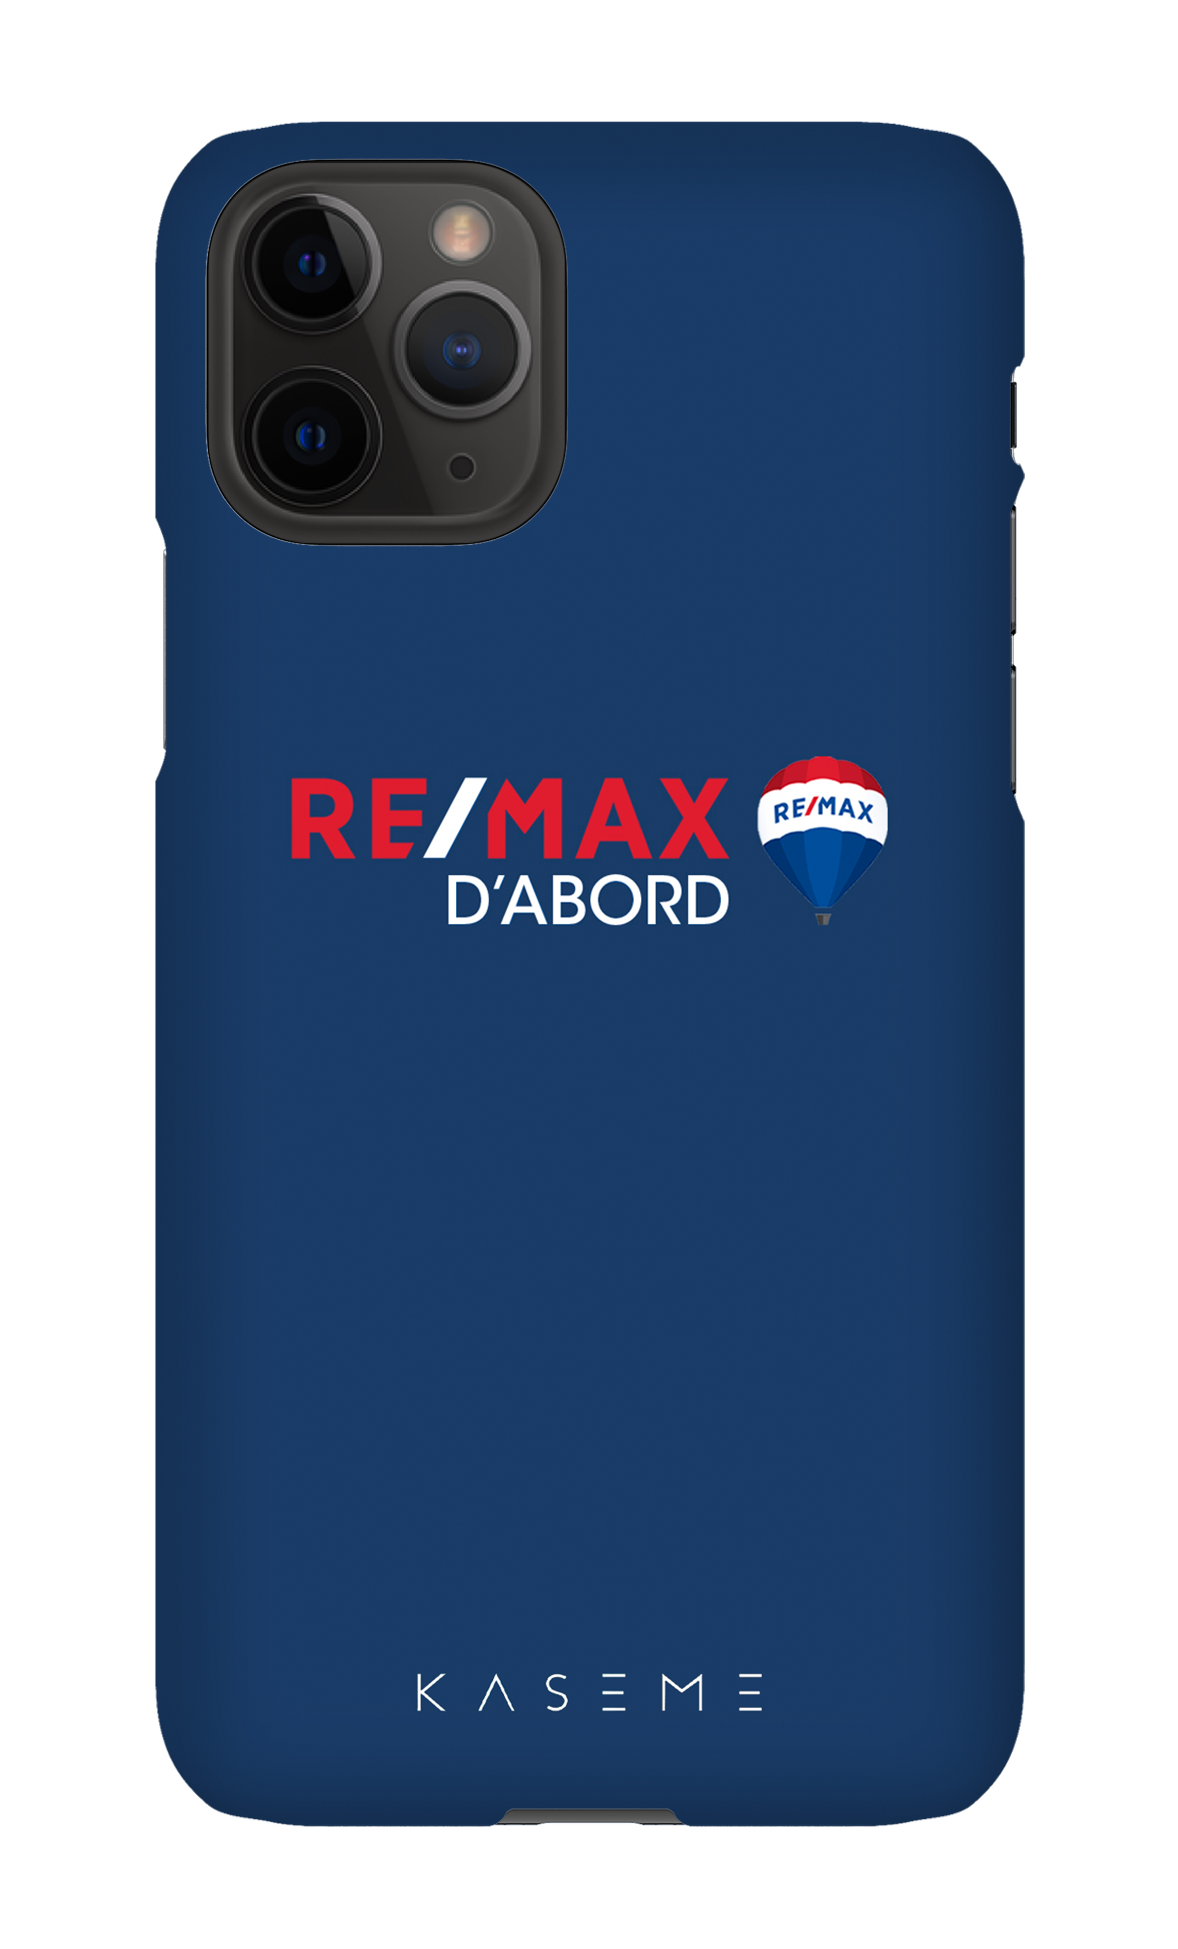 Remax D'abord Bleu - iPhone 11 Pro